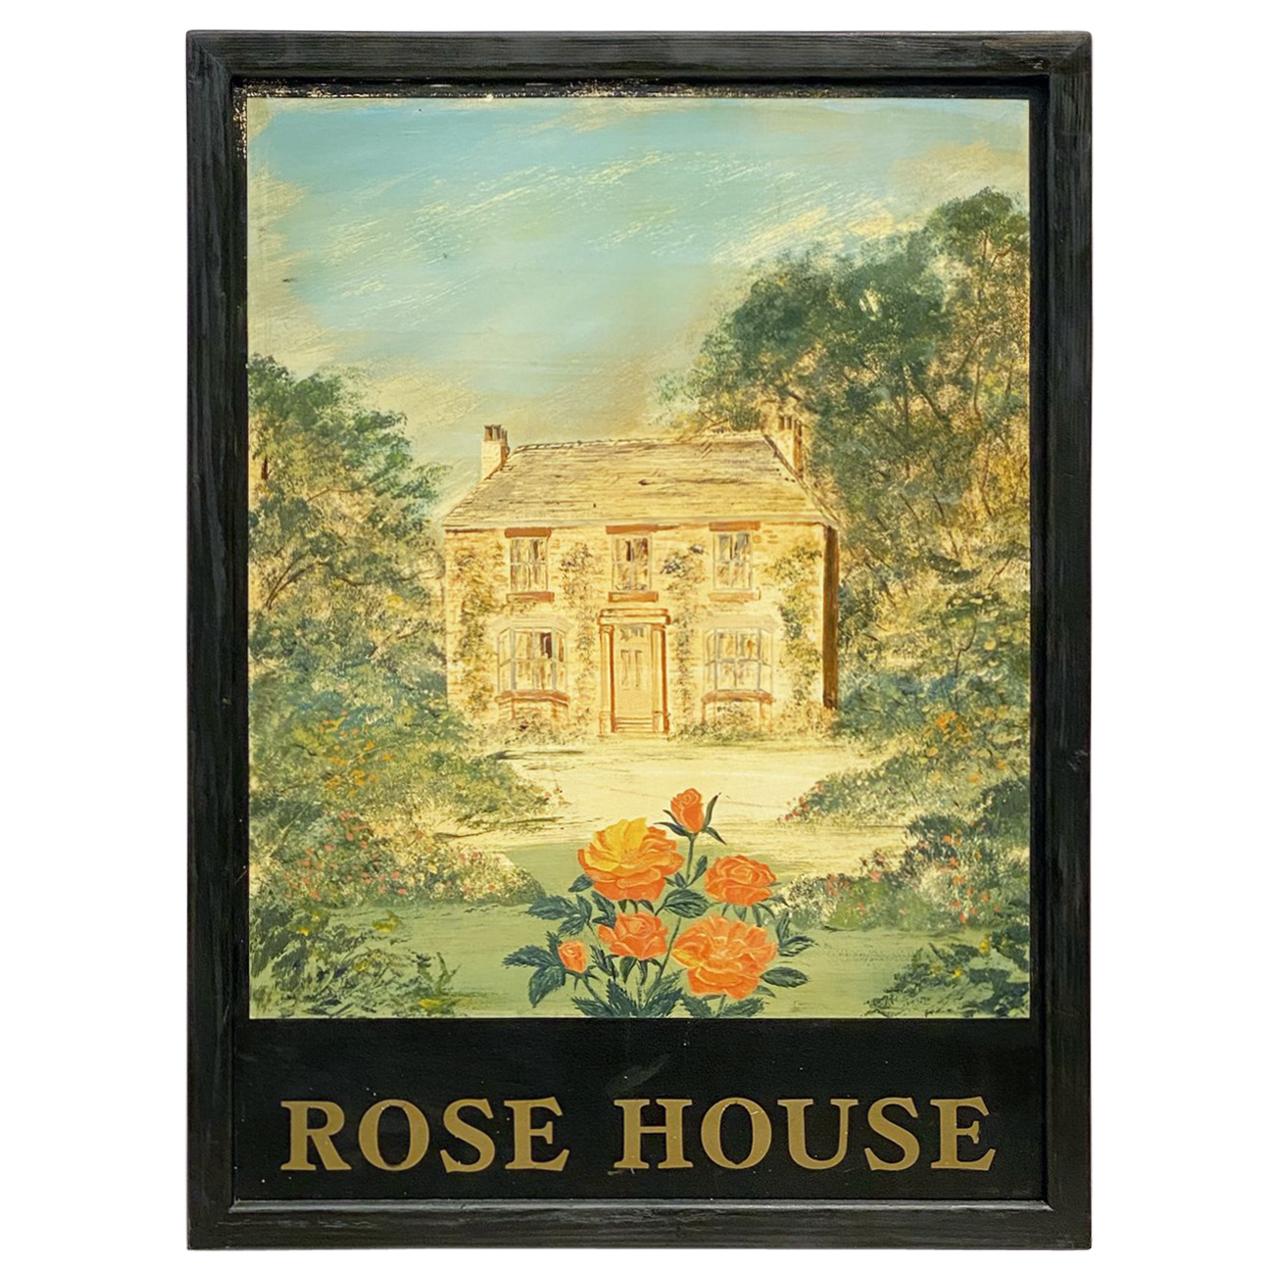 English Pub Sign, "Rose House"